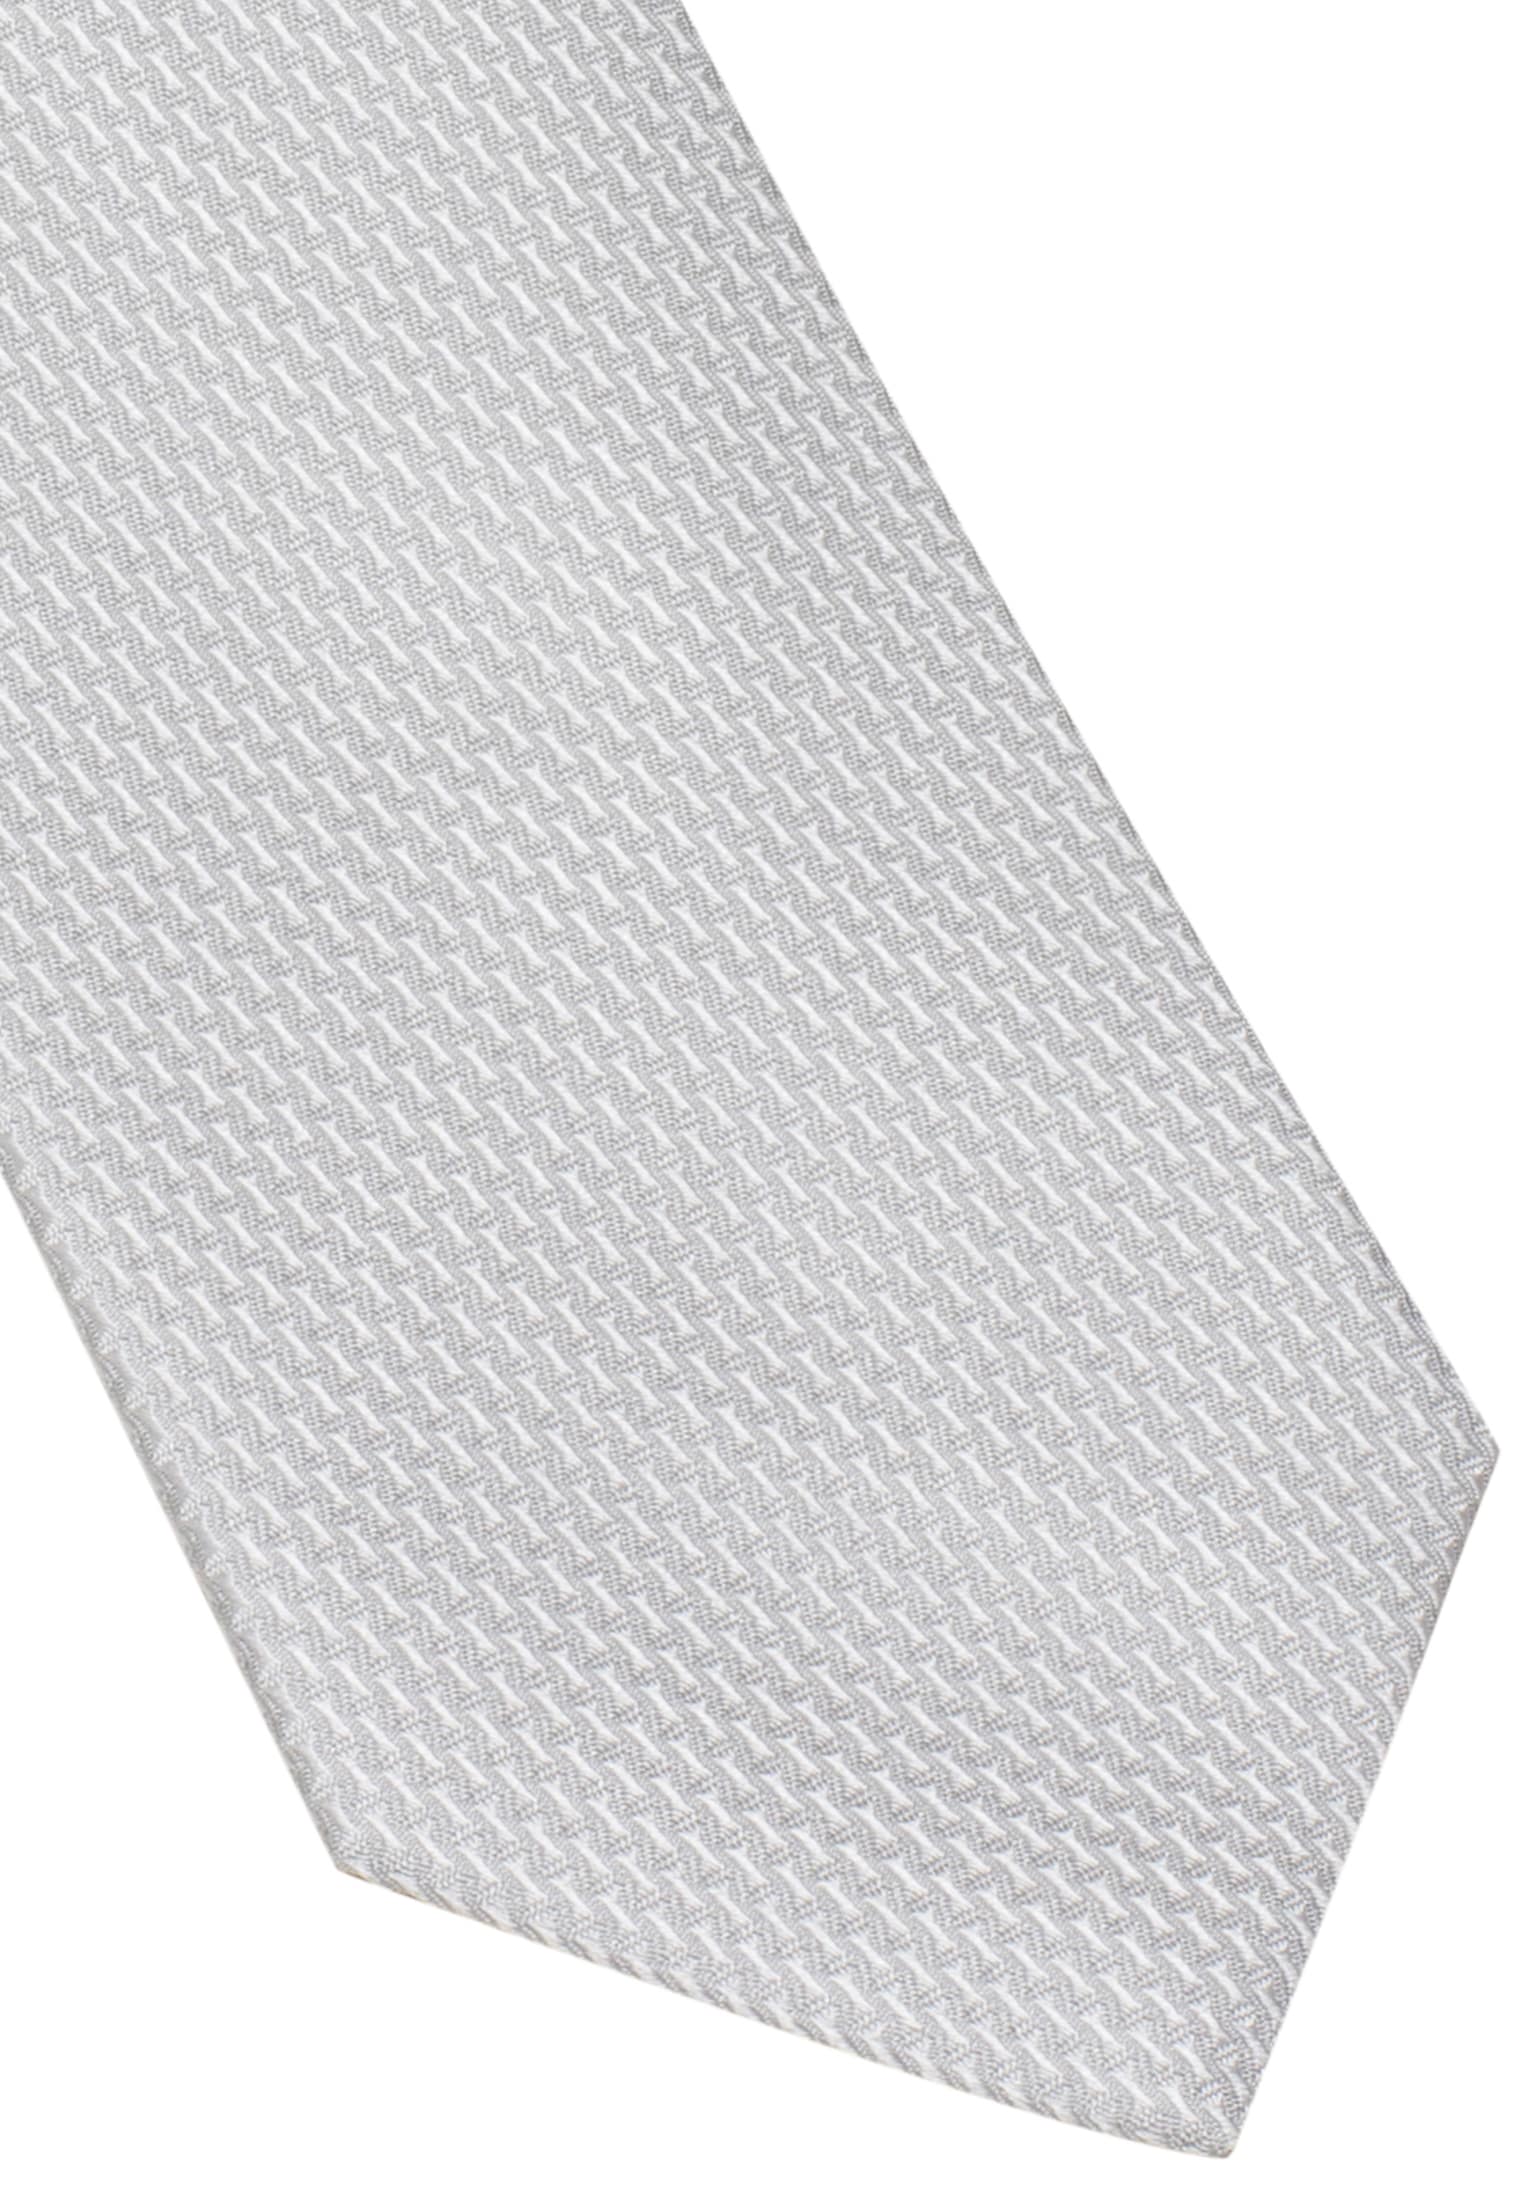 Krawatte in silber strukturiert | silber | 142 | 1AC01872-03-11-142